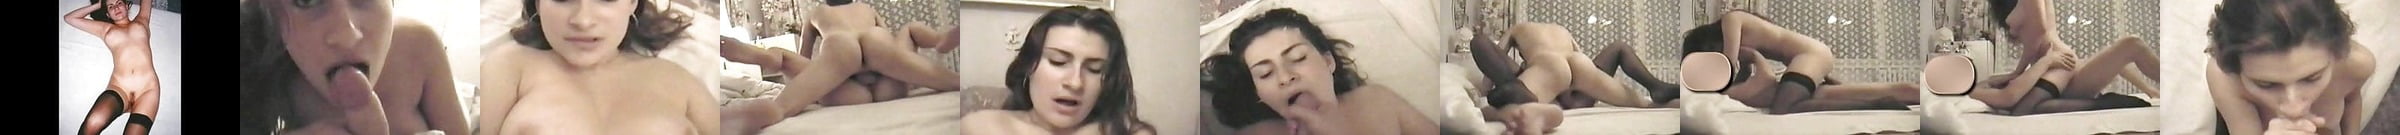 Free Girlfriend Facial Porn Videos Xhamster